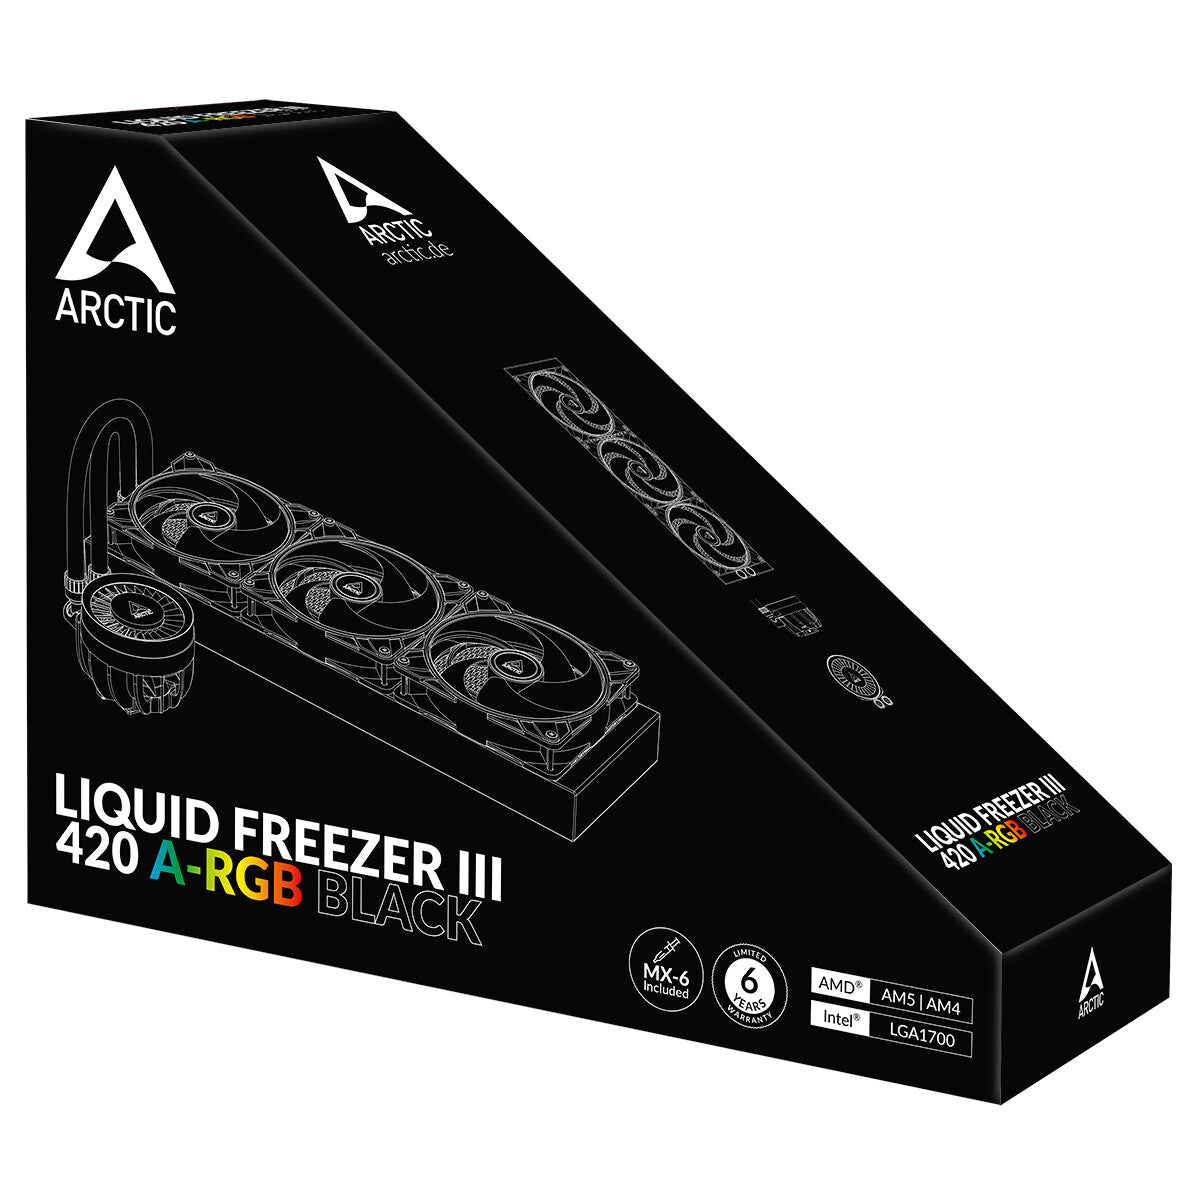 ARCTIC Liquid Freezer III 420 A-RGB - All-in-One Liquid CPU Cooler in Black - 420mm